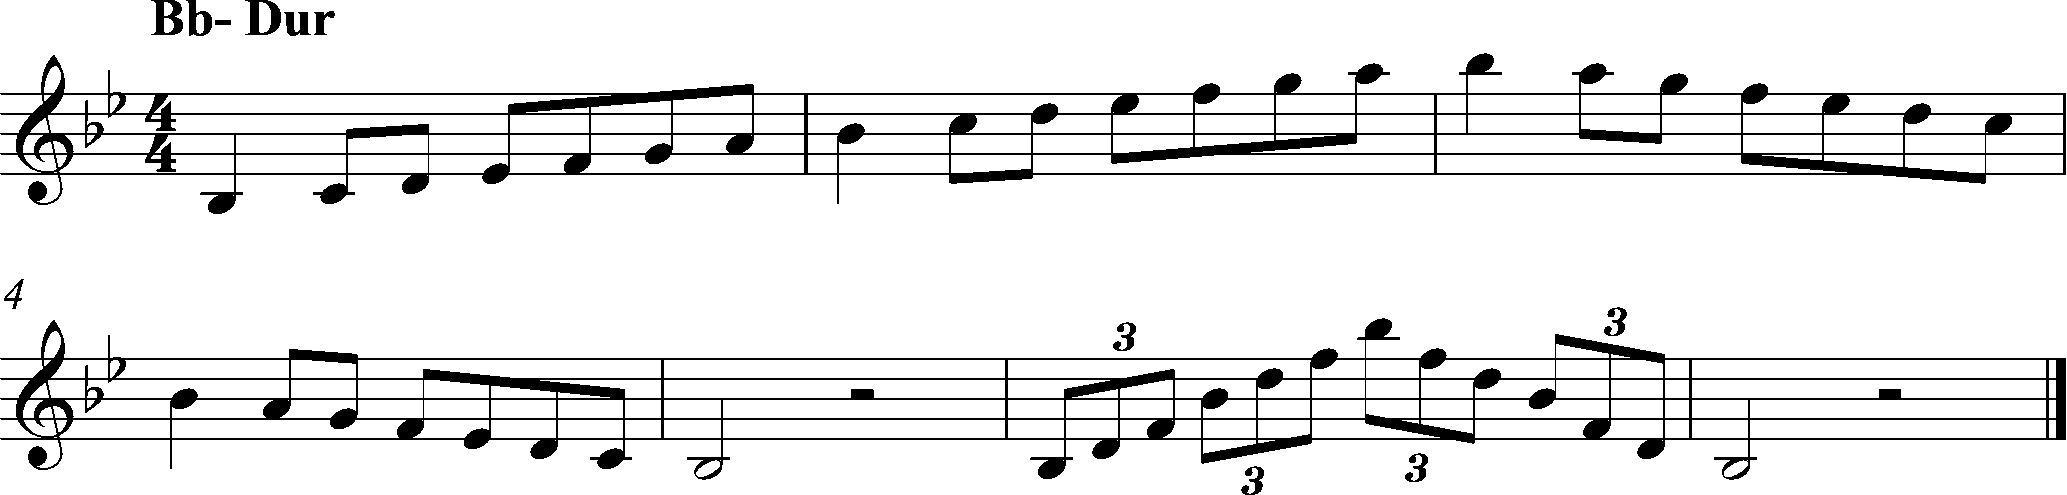 Bb-Dur, Tonleiter Klarinette